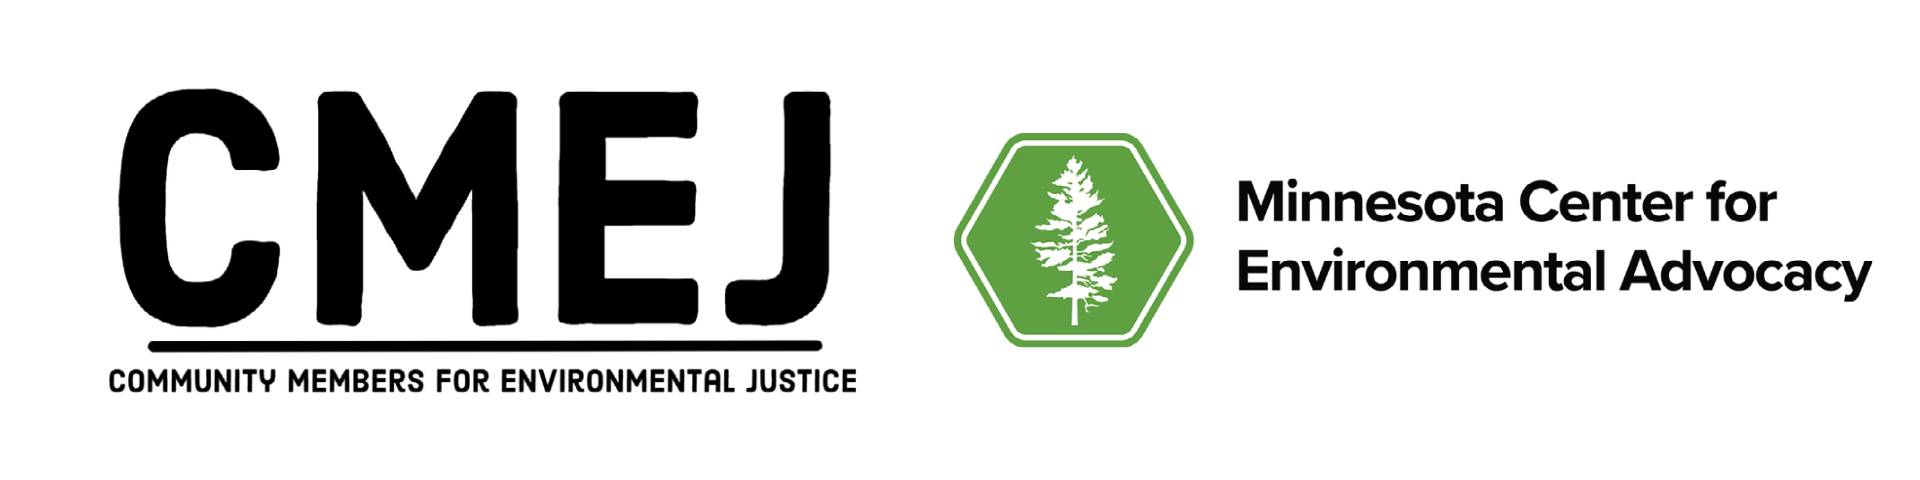 MCEA logo and CMEJ logo